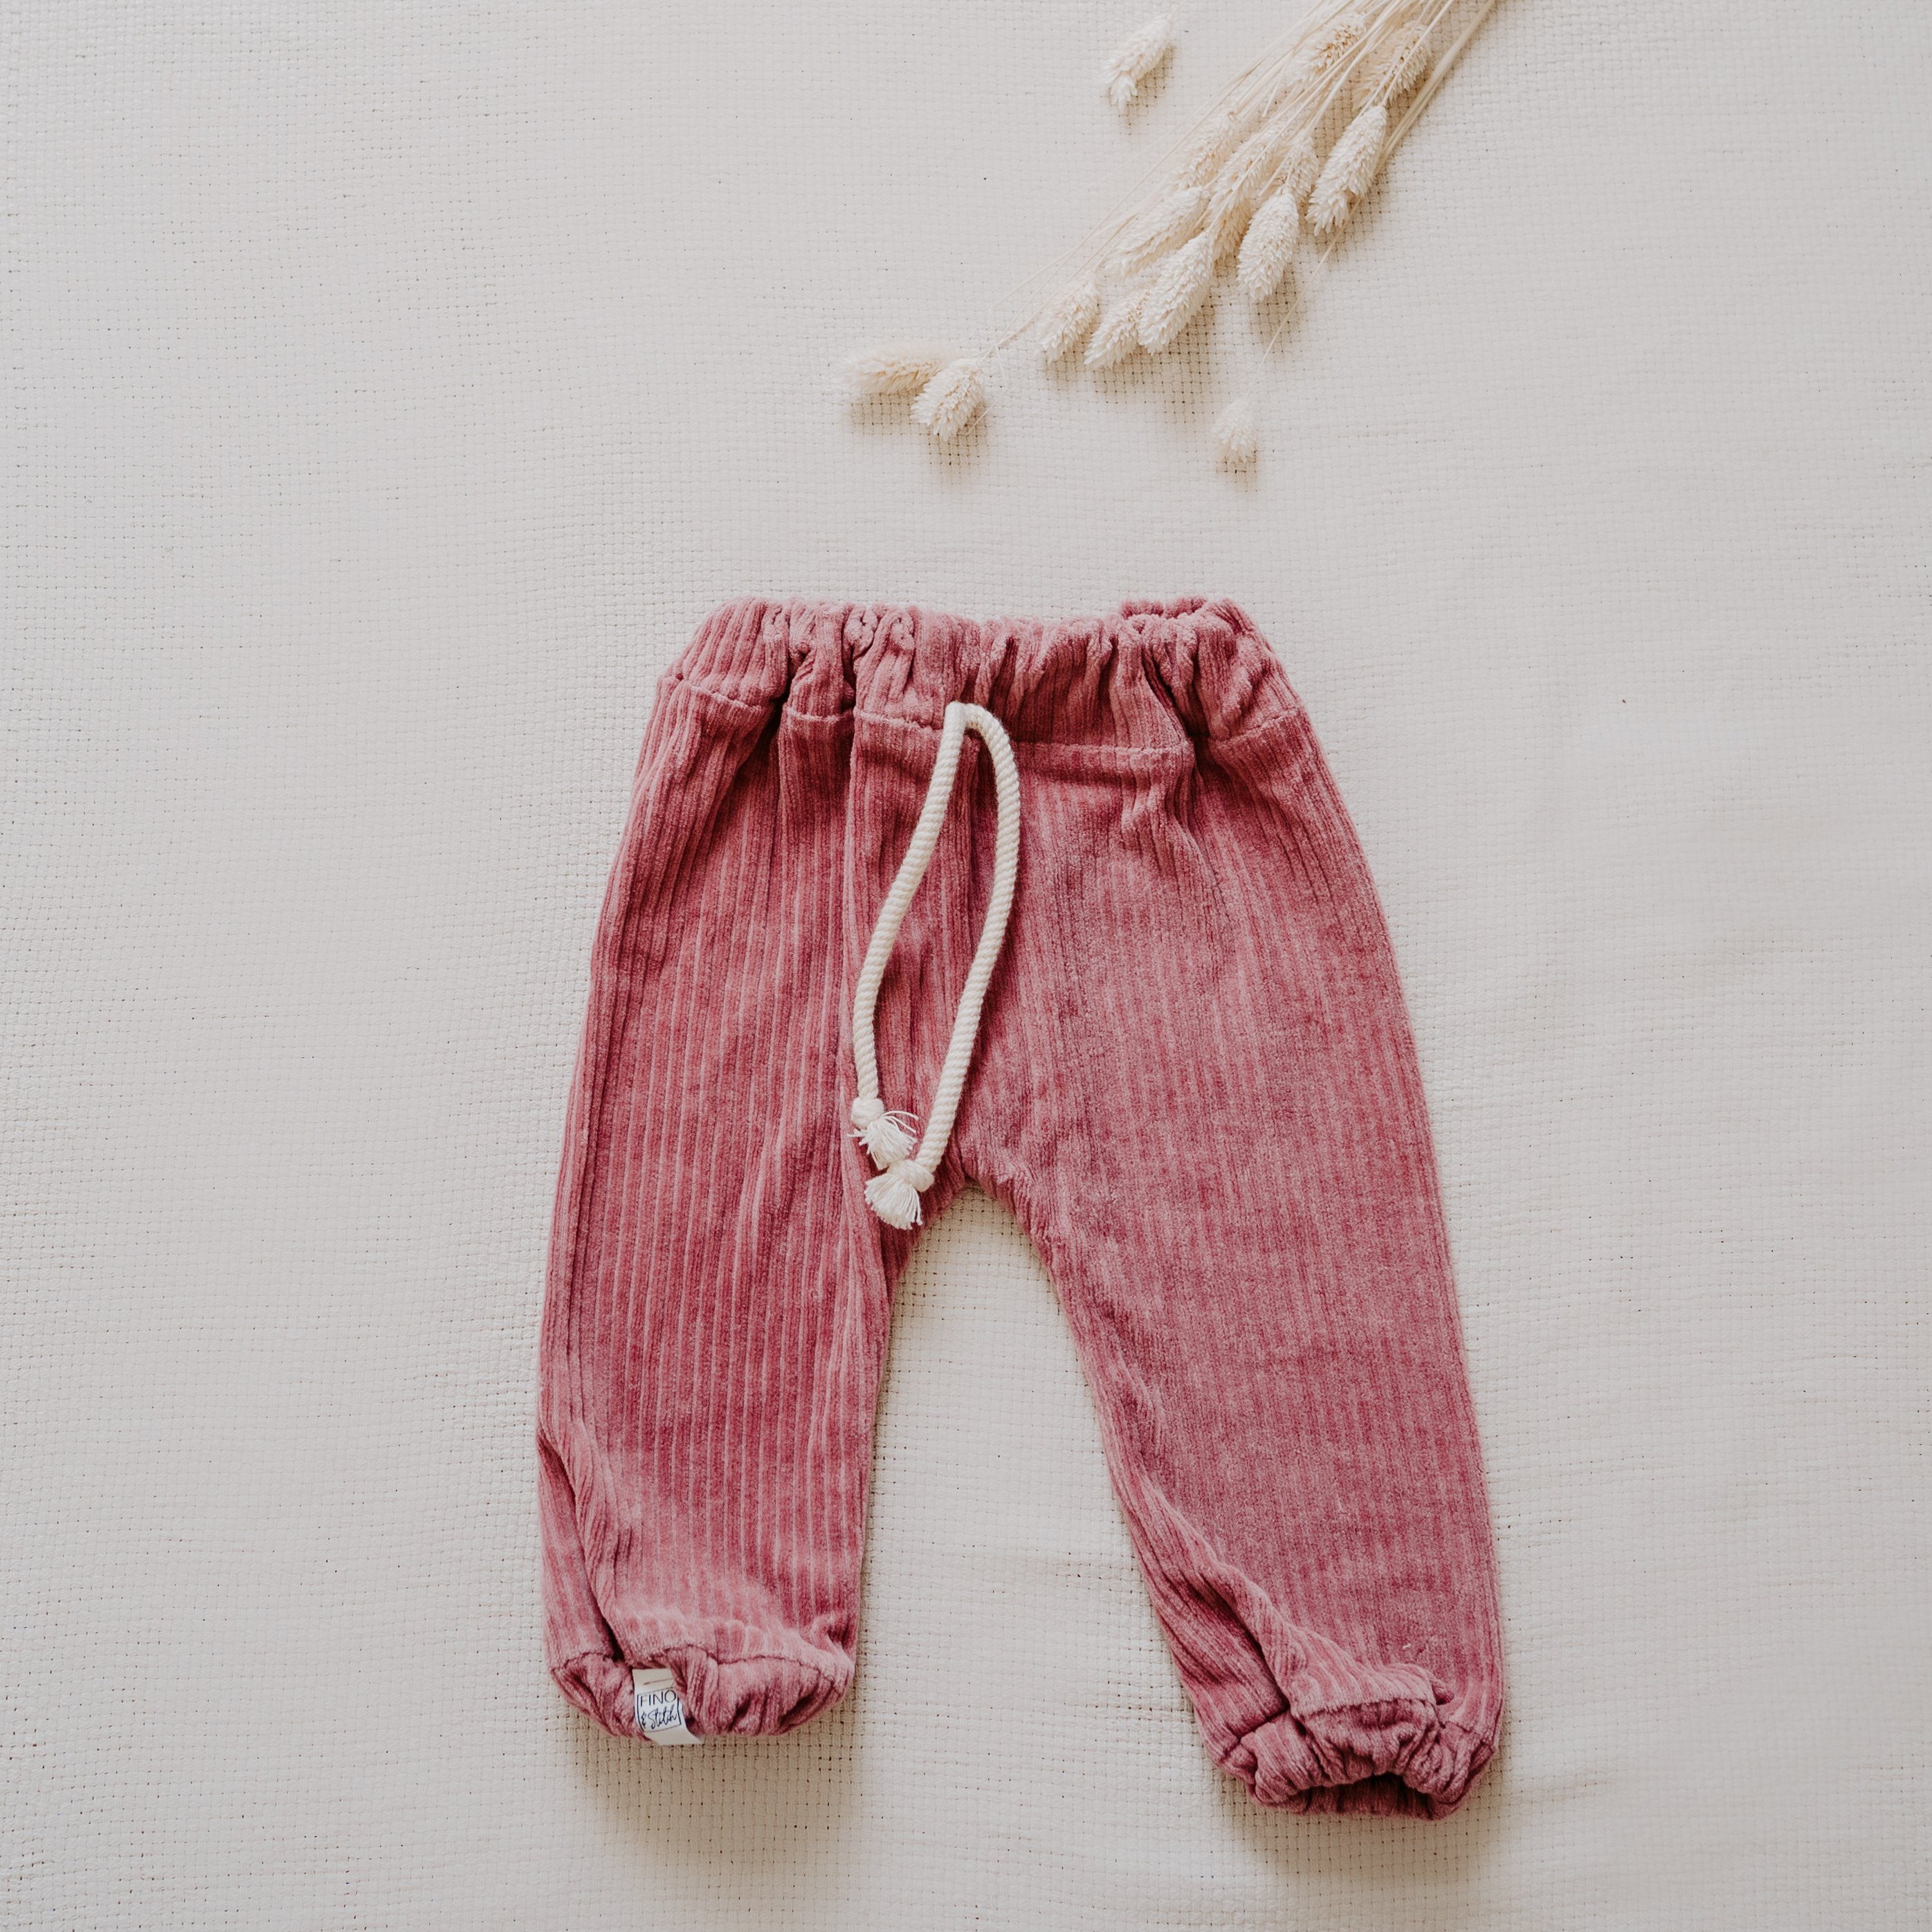 FINO & Stitch Kreativset DYI Nähset - Kuschel-Cord Jogger Pants Baby&Kids - zugeschnitten rosa